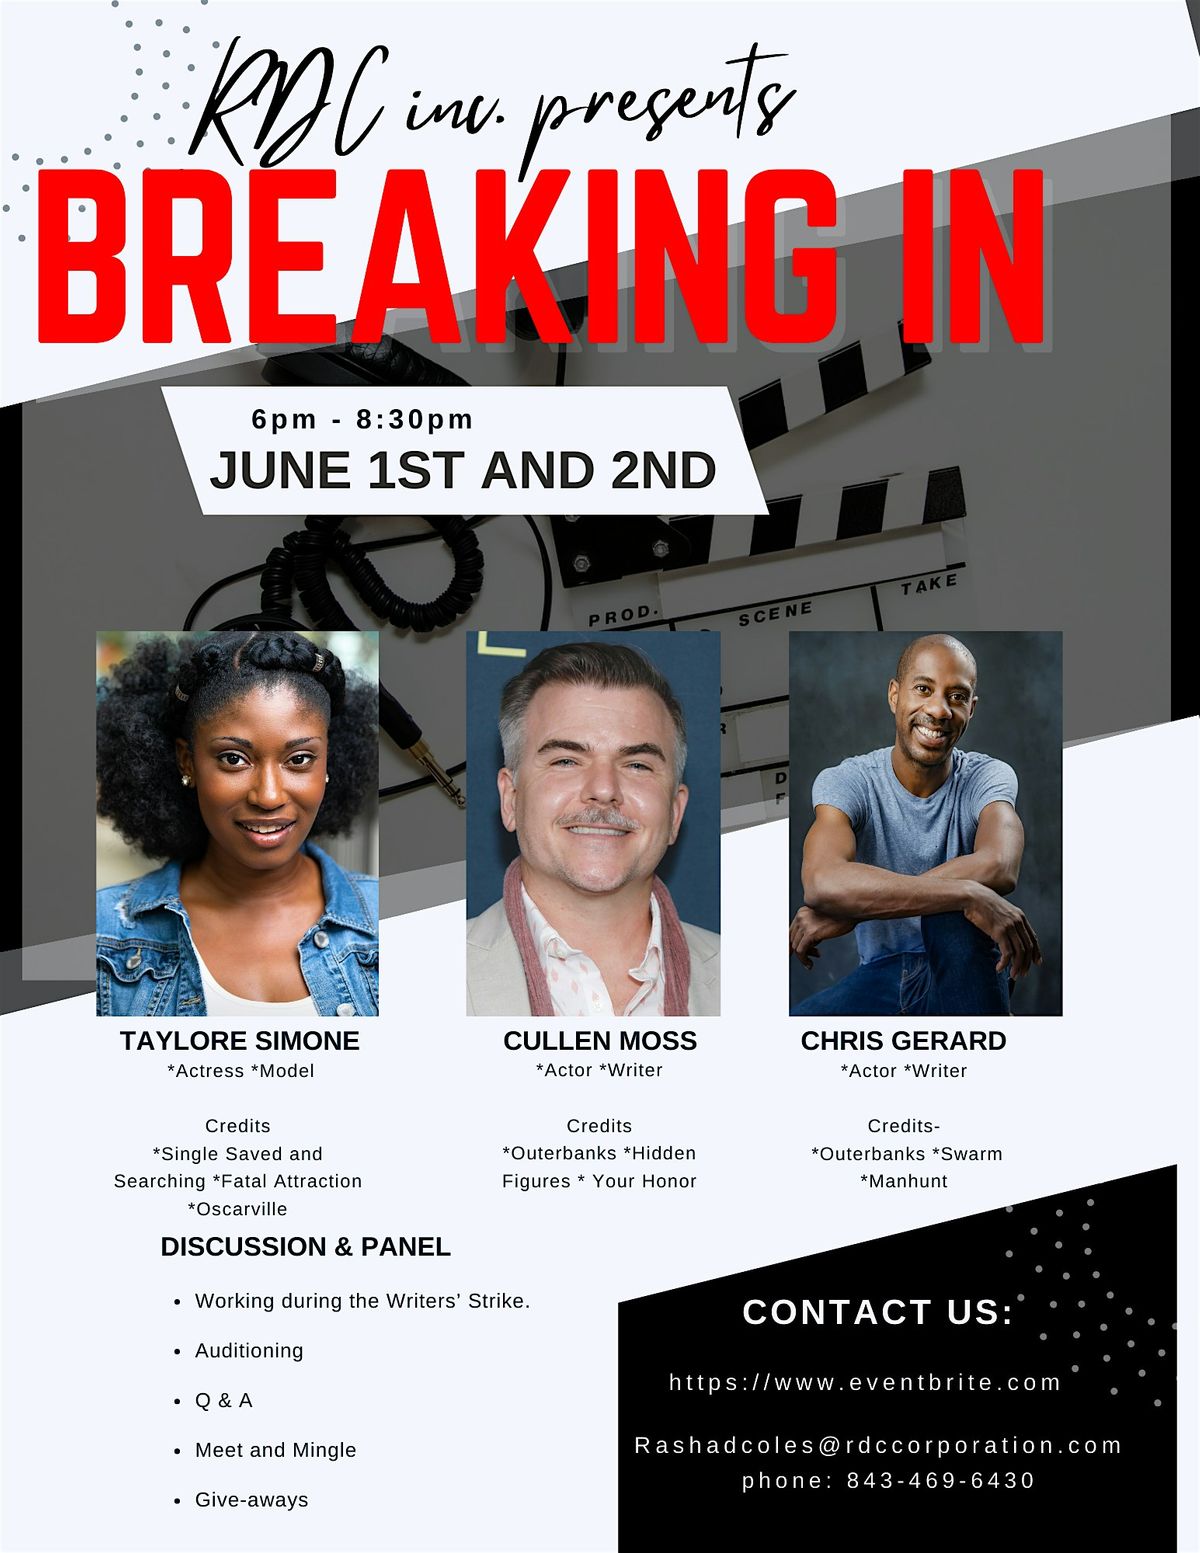 RDC Inc presents "Breaking In"